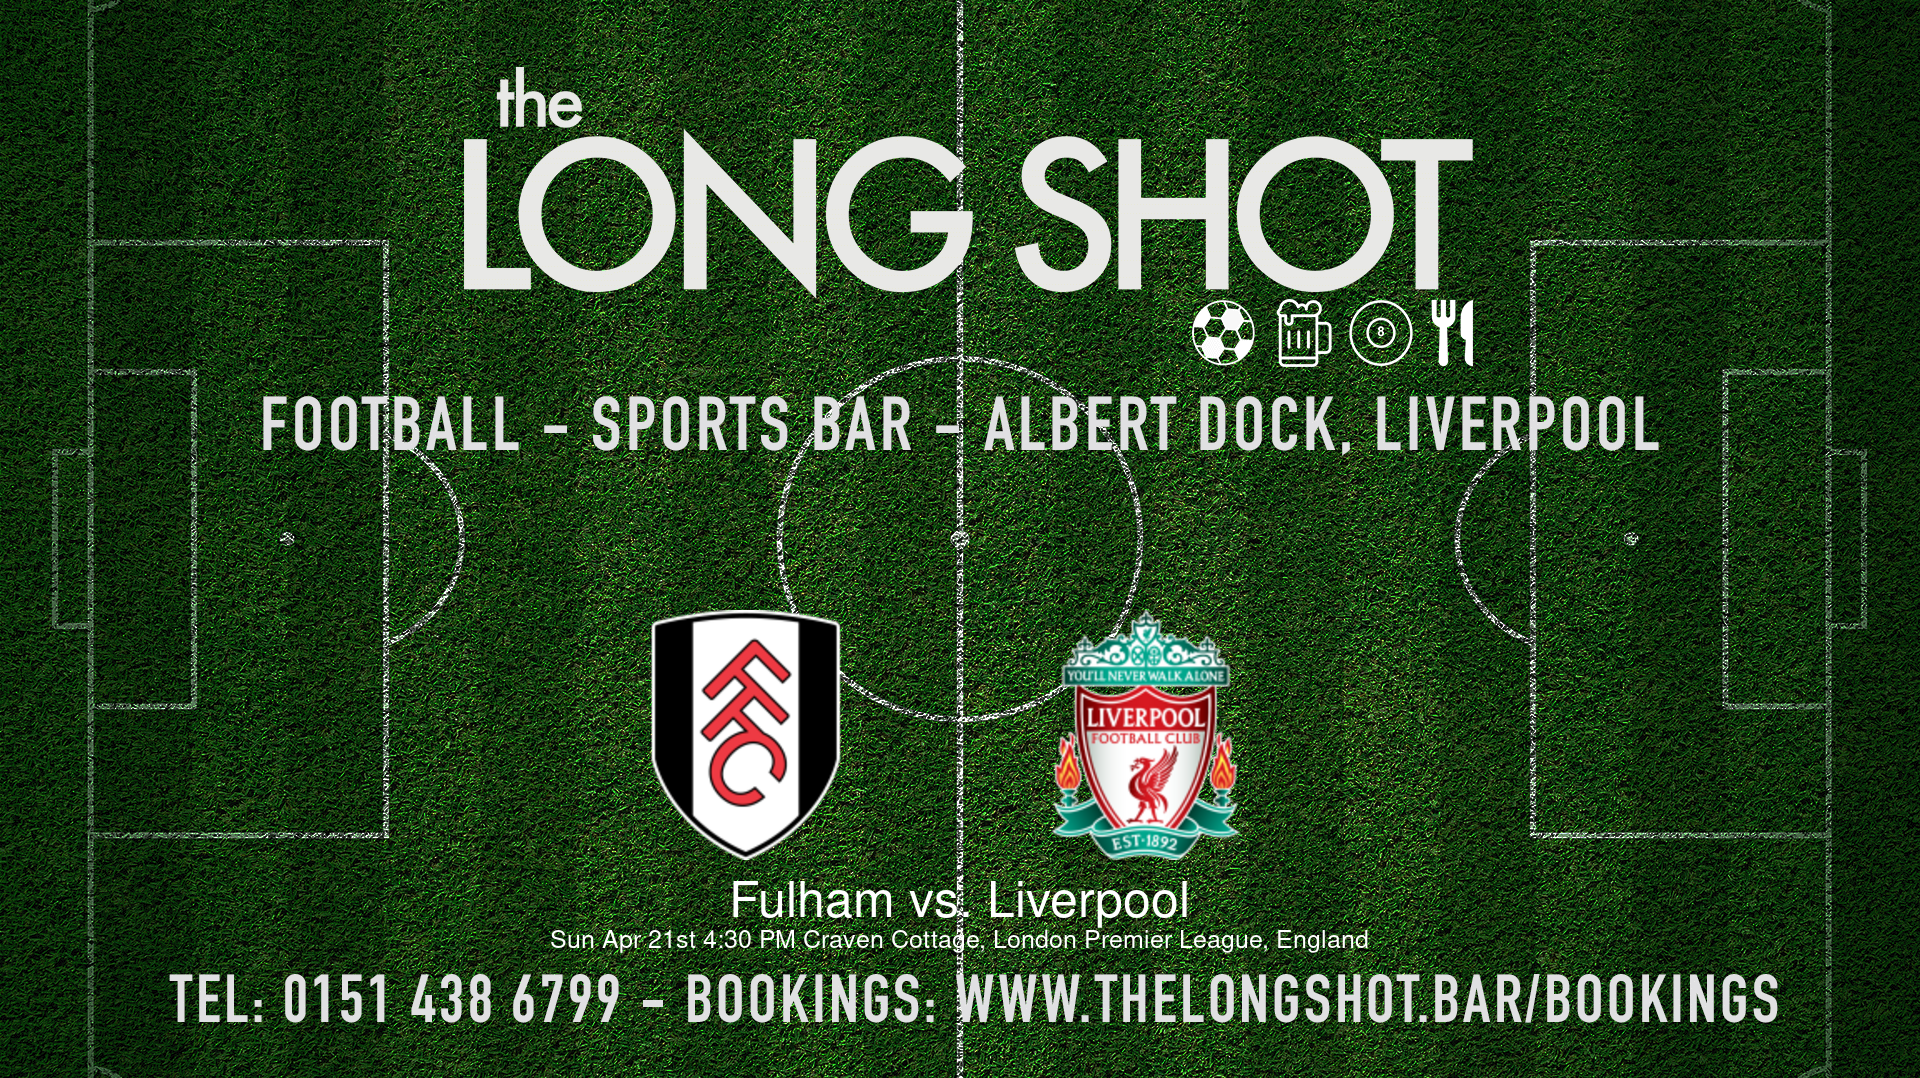 Event image - Fulham vs. Liverpool